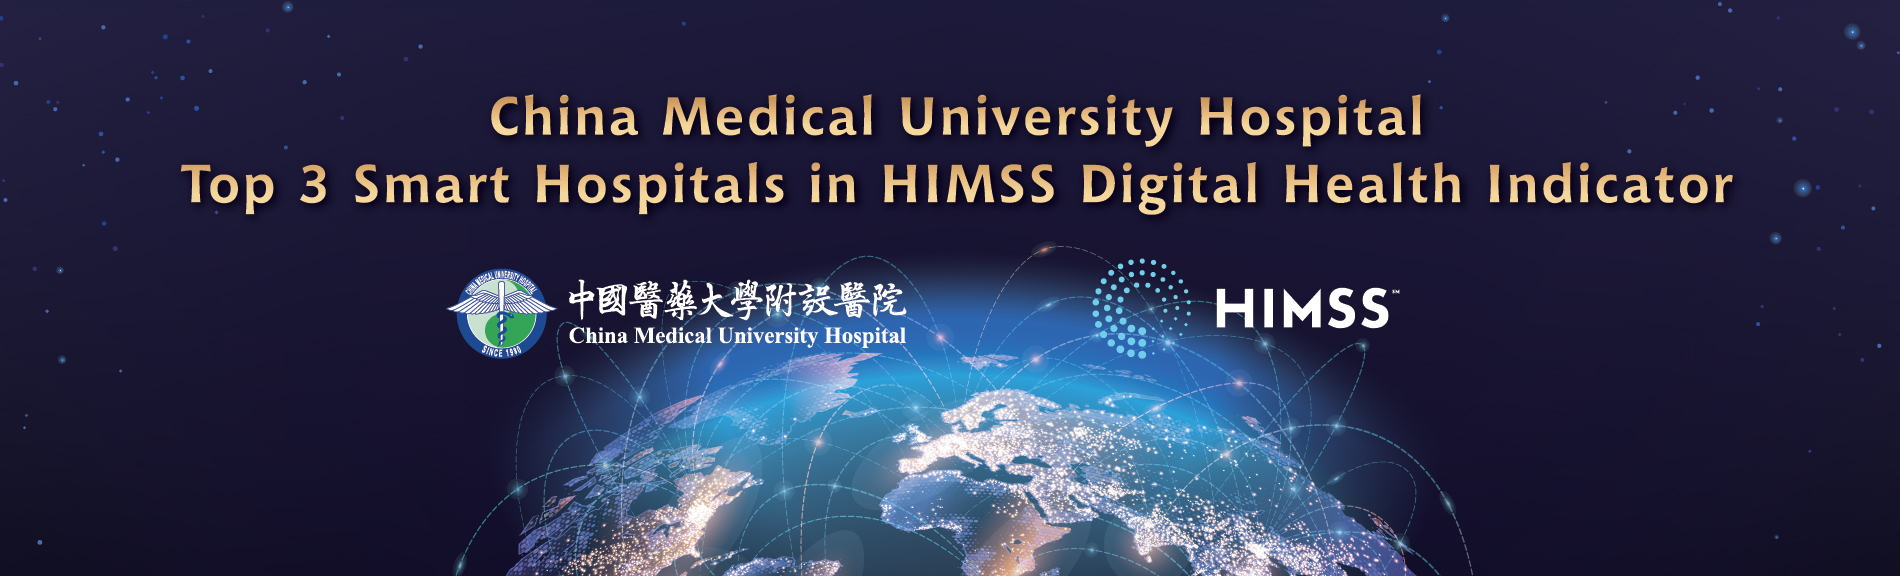 HIMSS 中國醫藥大學附設醫院轉型榮登世界前三智慧醫院